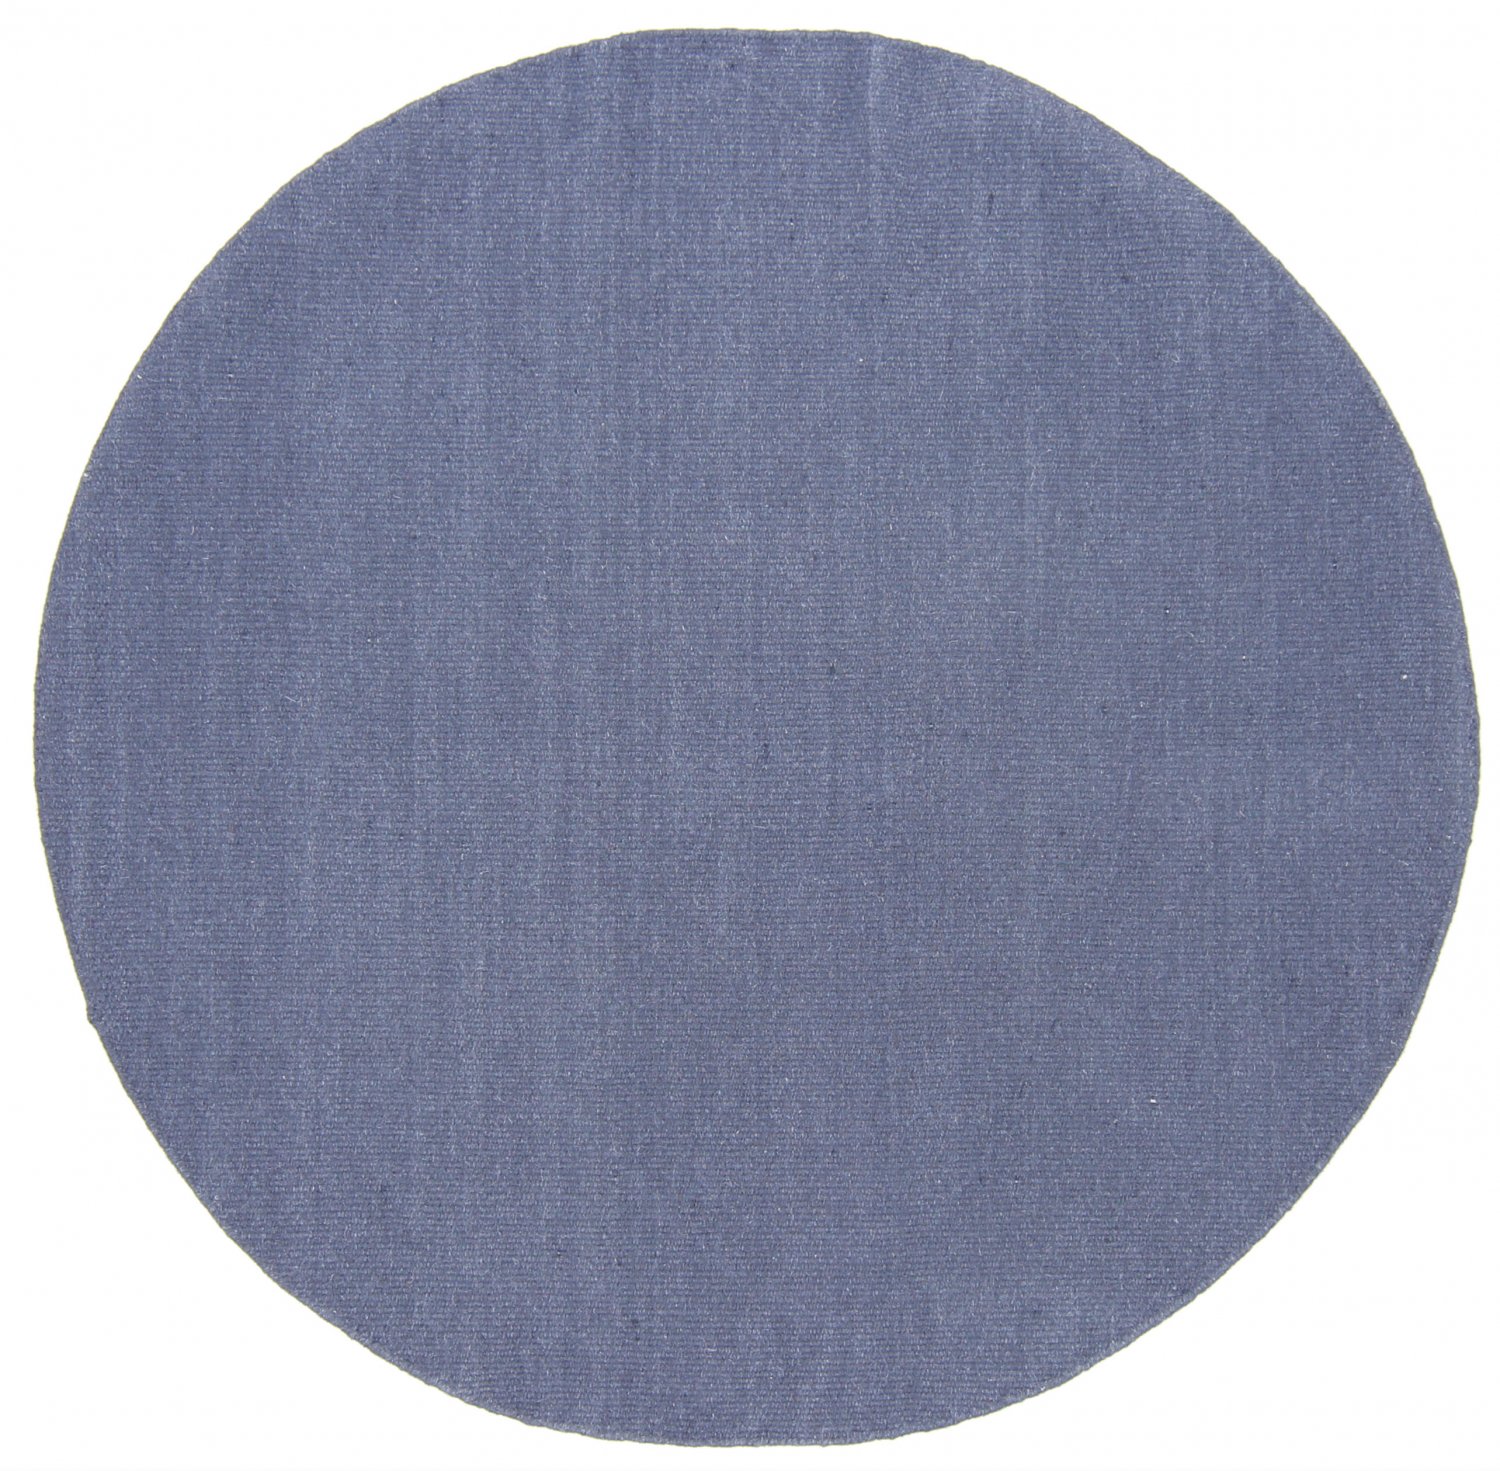 Runde tepper - Bibury (blå)